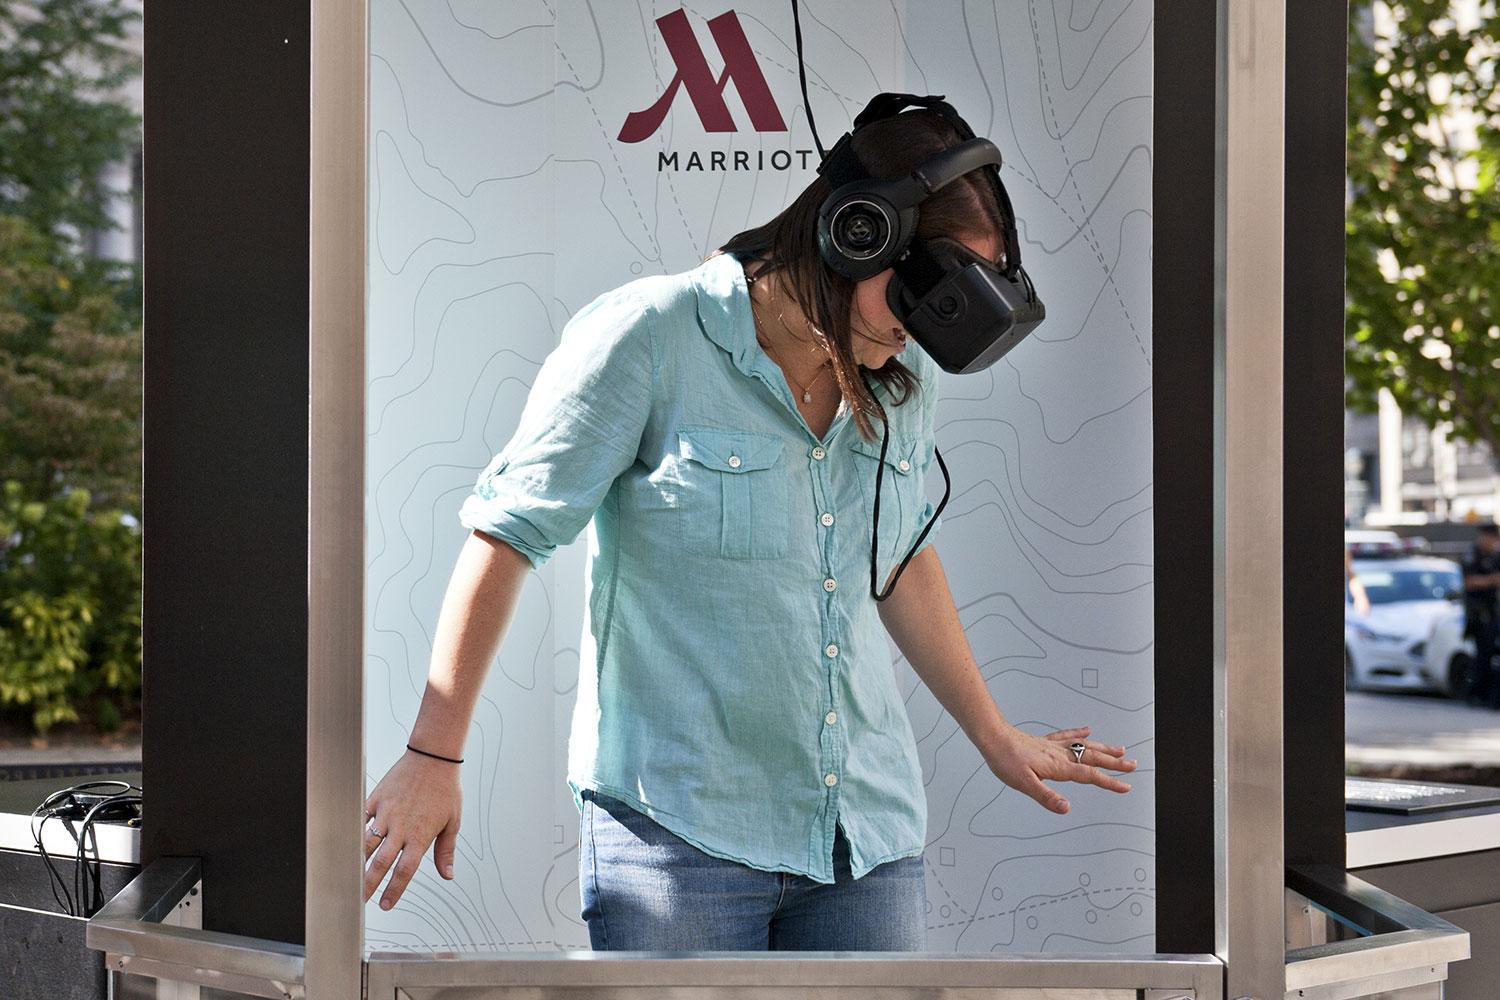 Marriott Oculus